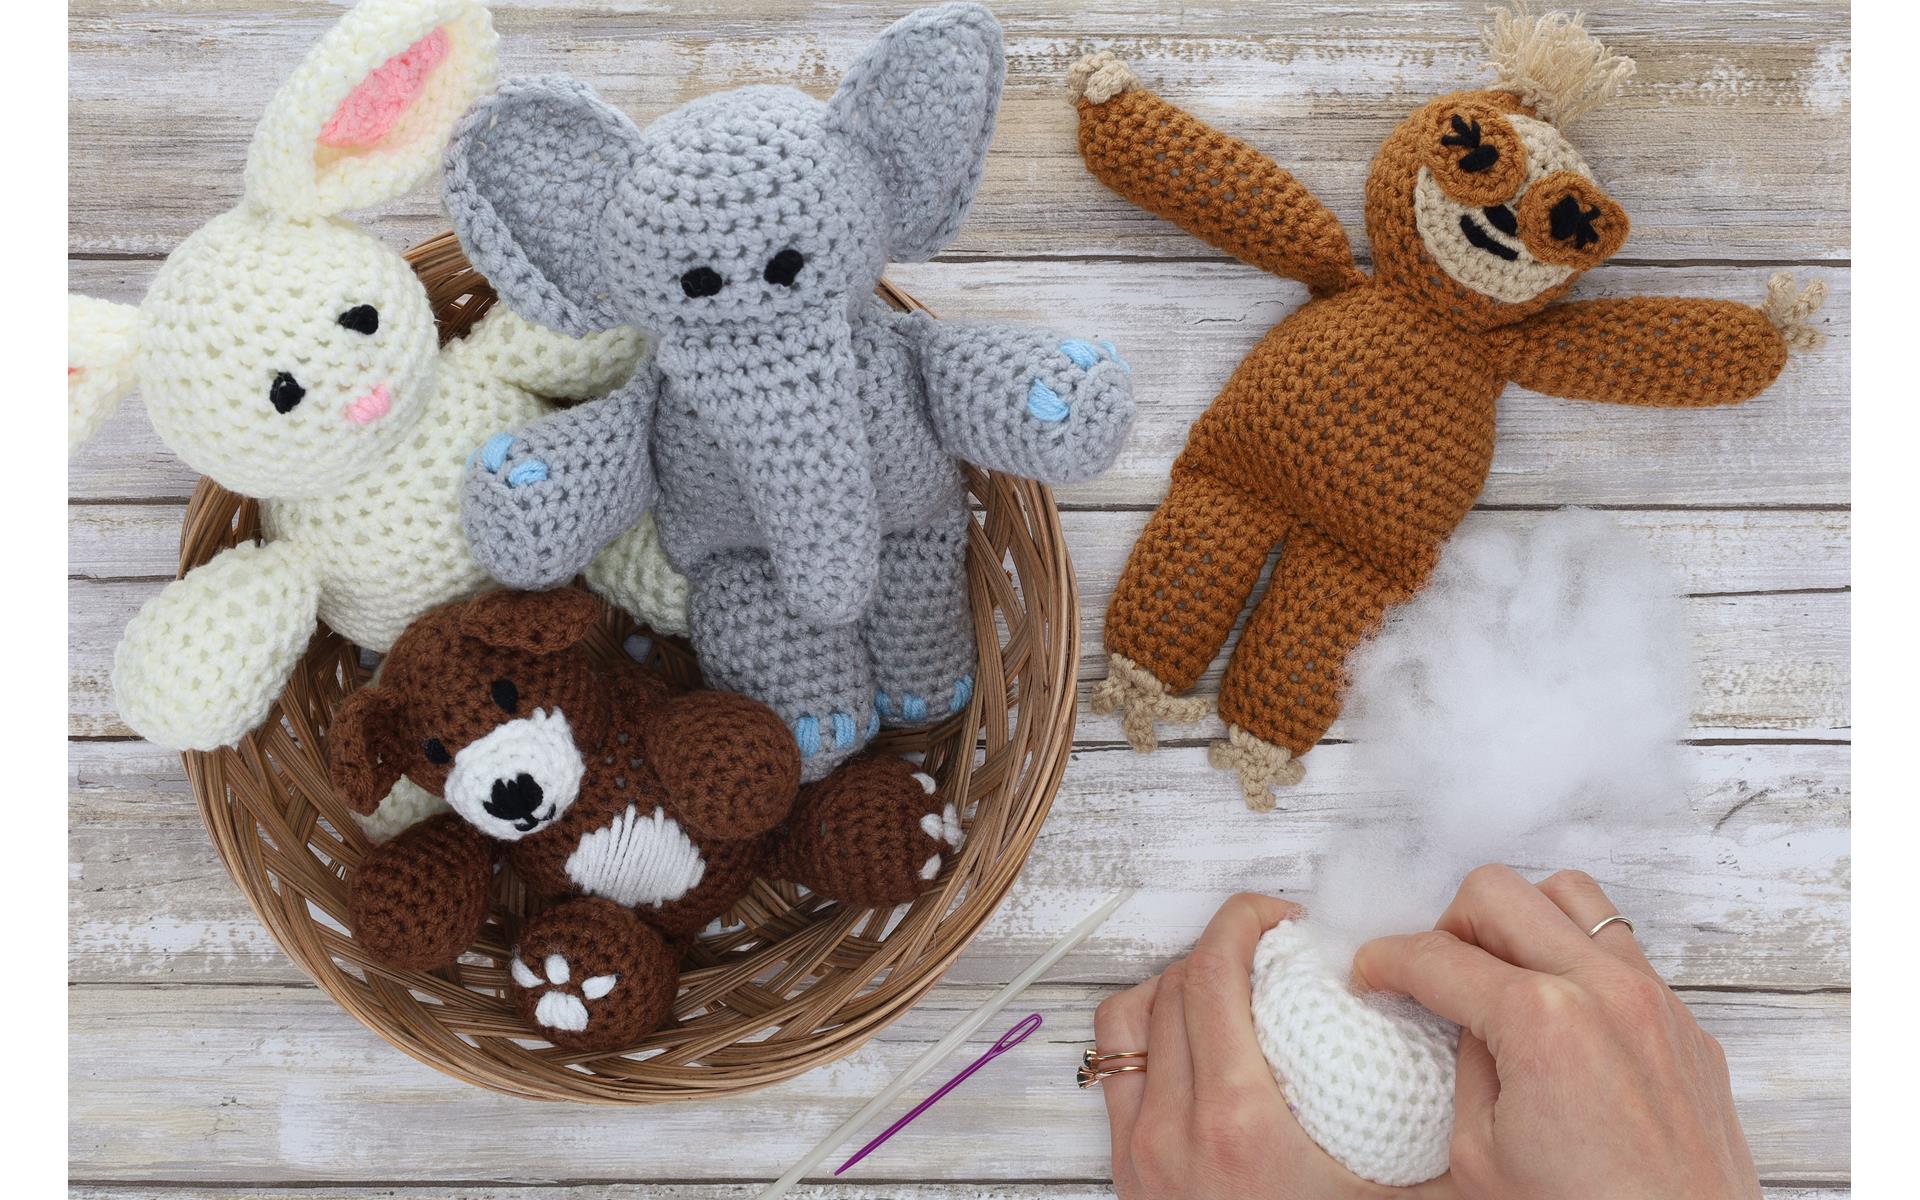 Mini Maker Bunny Crochet Kit - Craft Warehouse